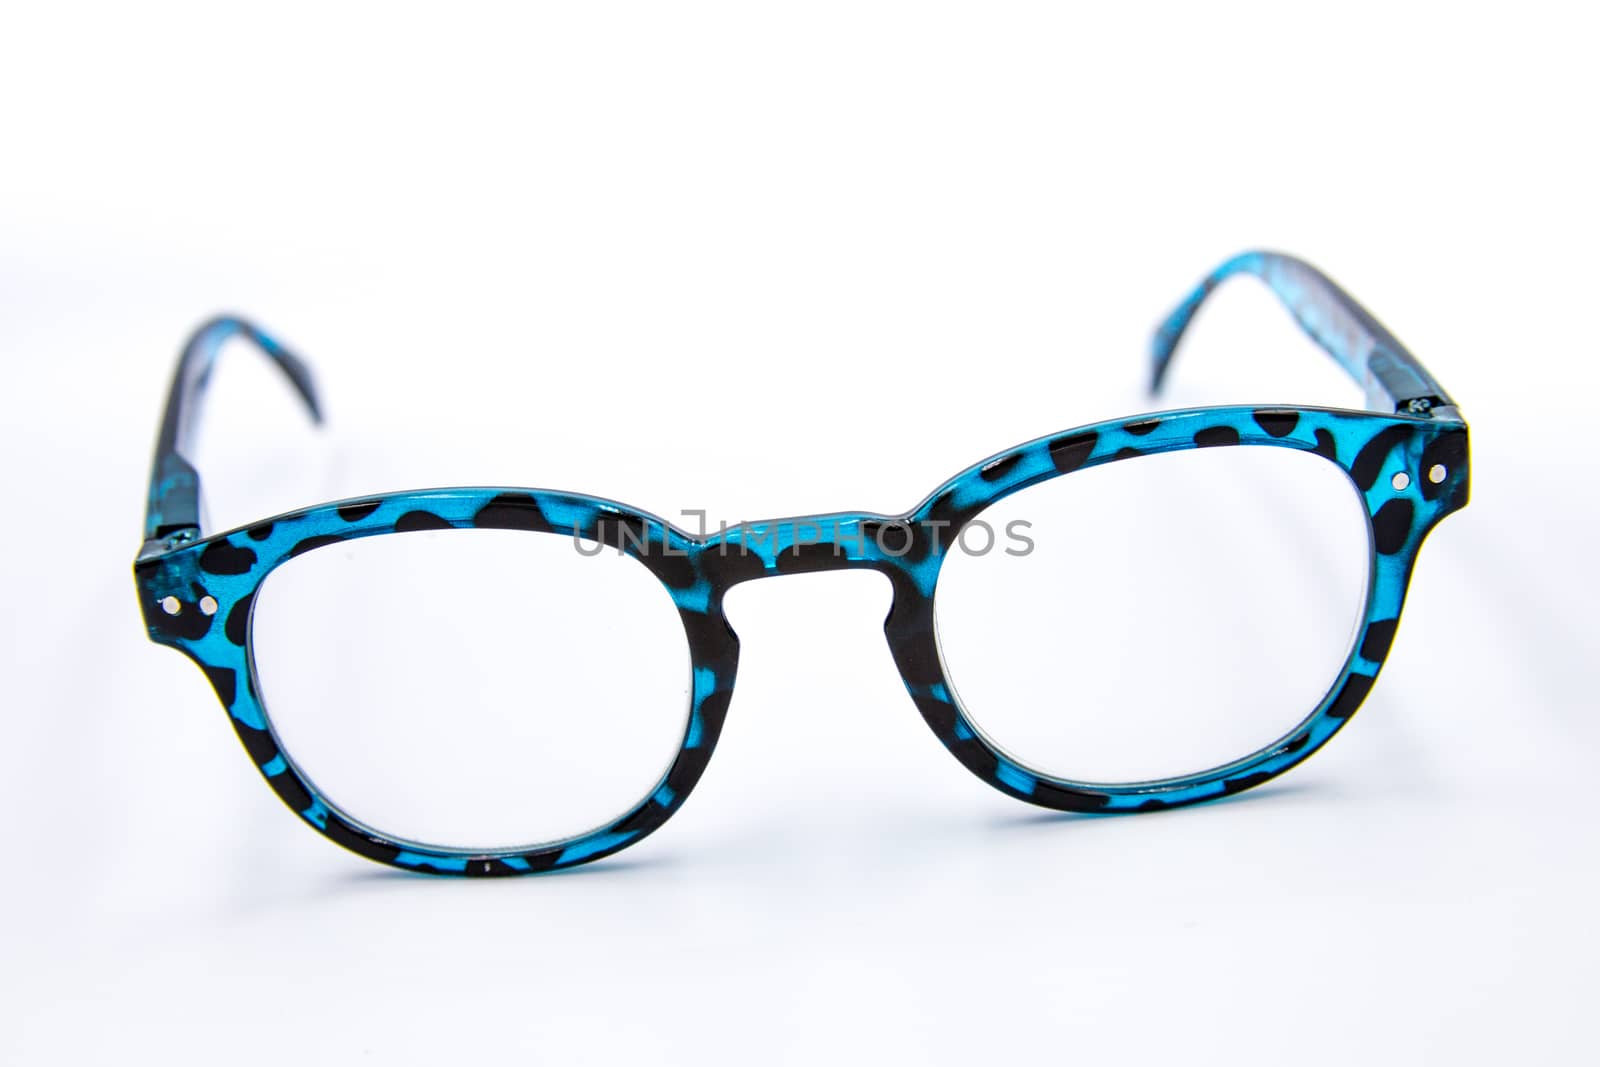 Blue-black eyeglasses strap on the white ground.